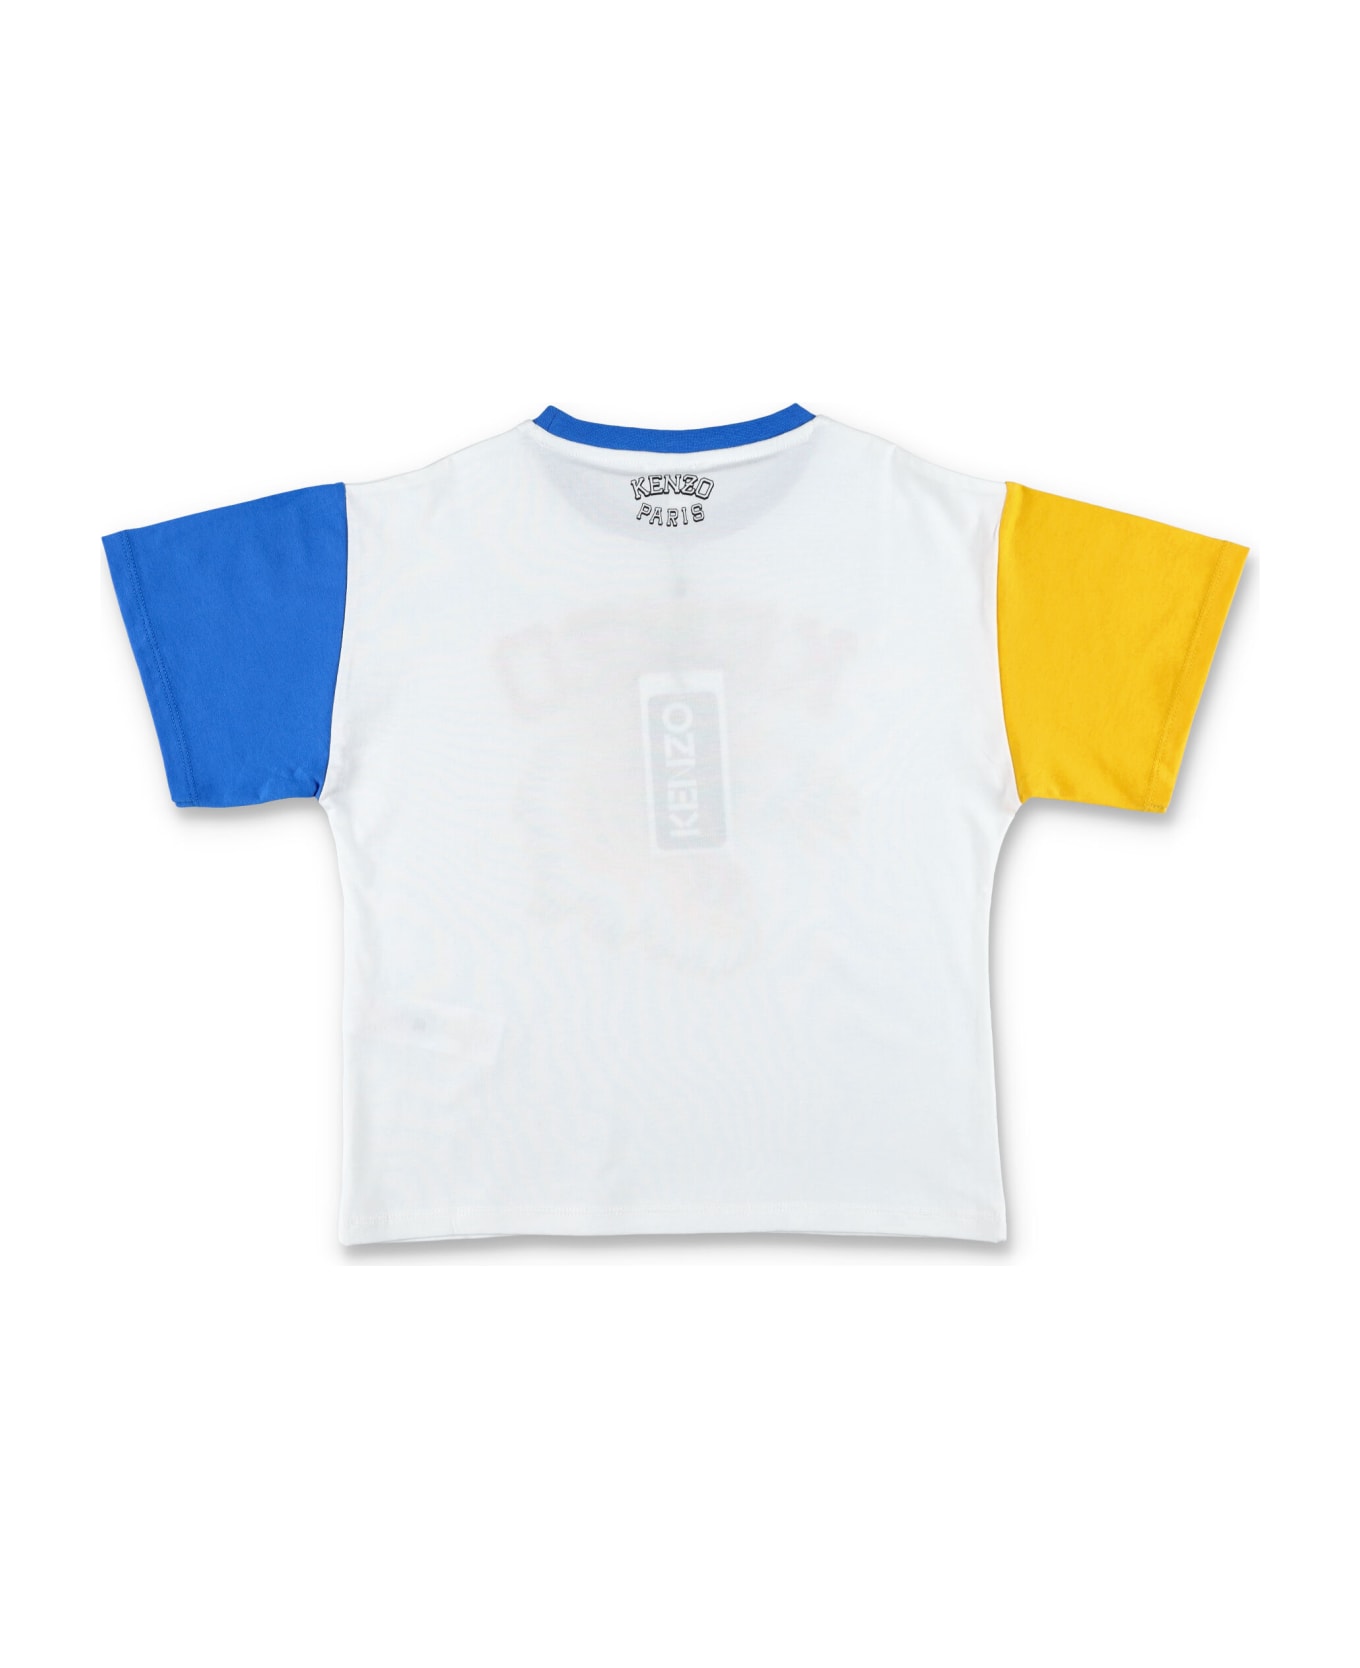 Kenzo Kids Tiger T-shirt - IVORY